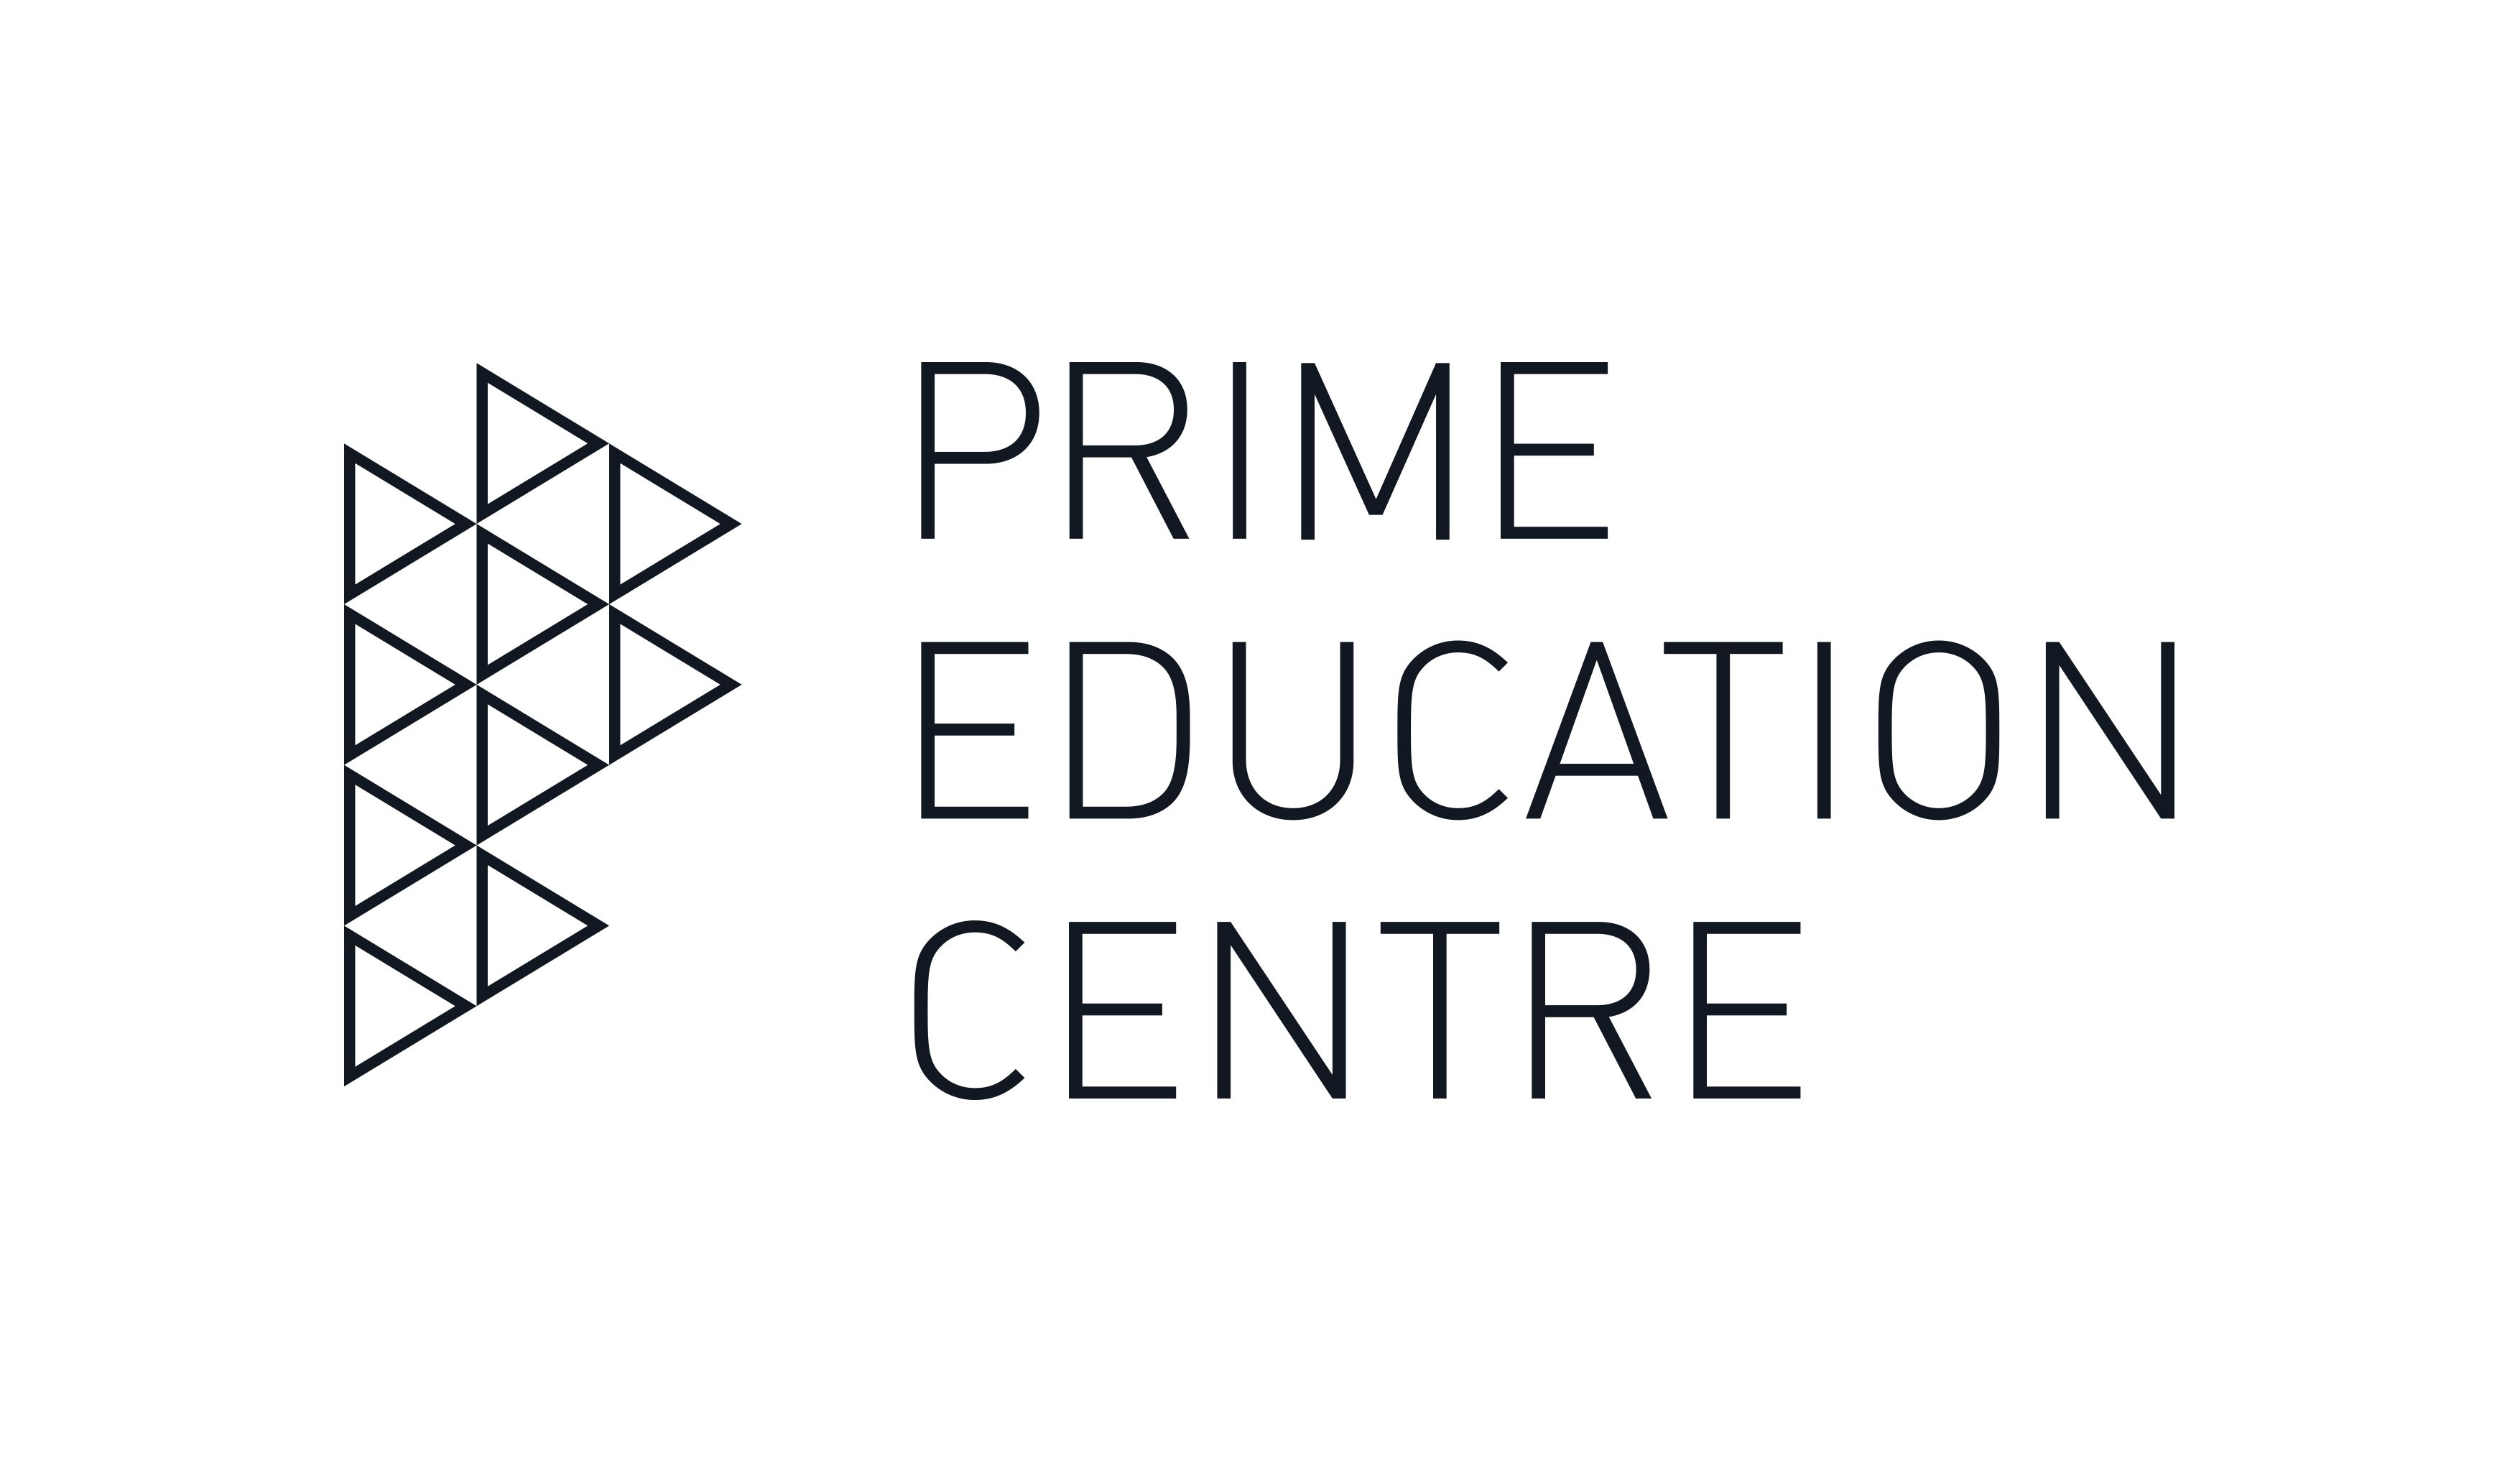 Prime Education Centre